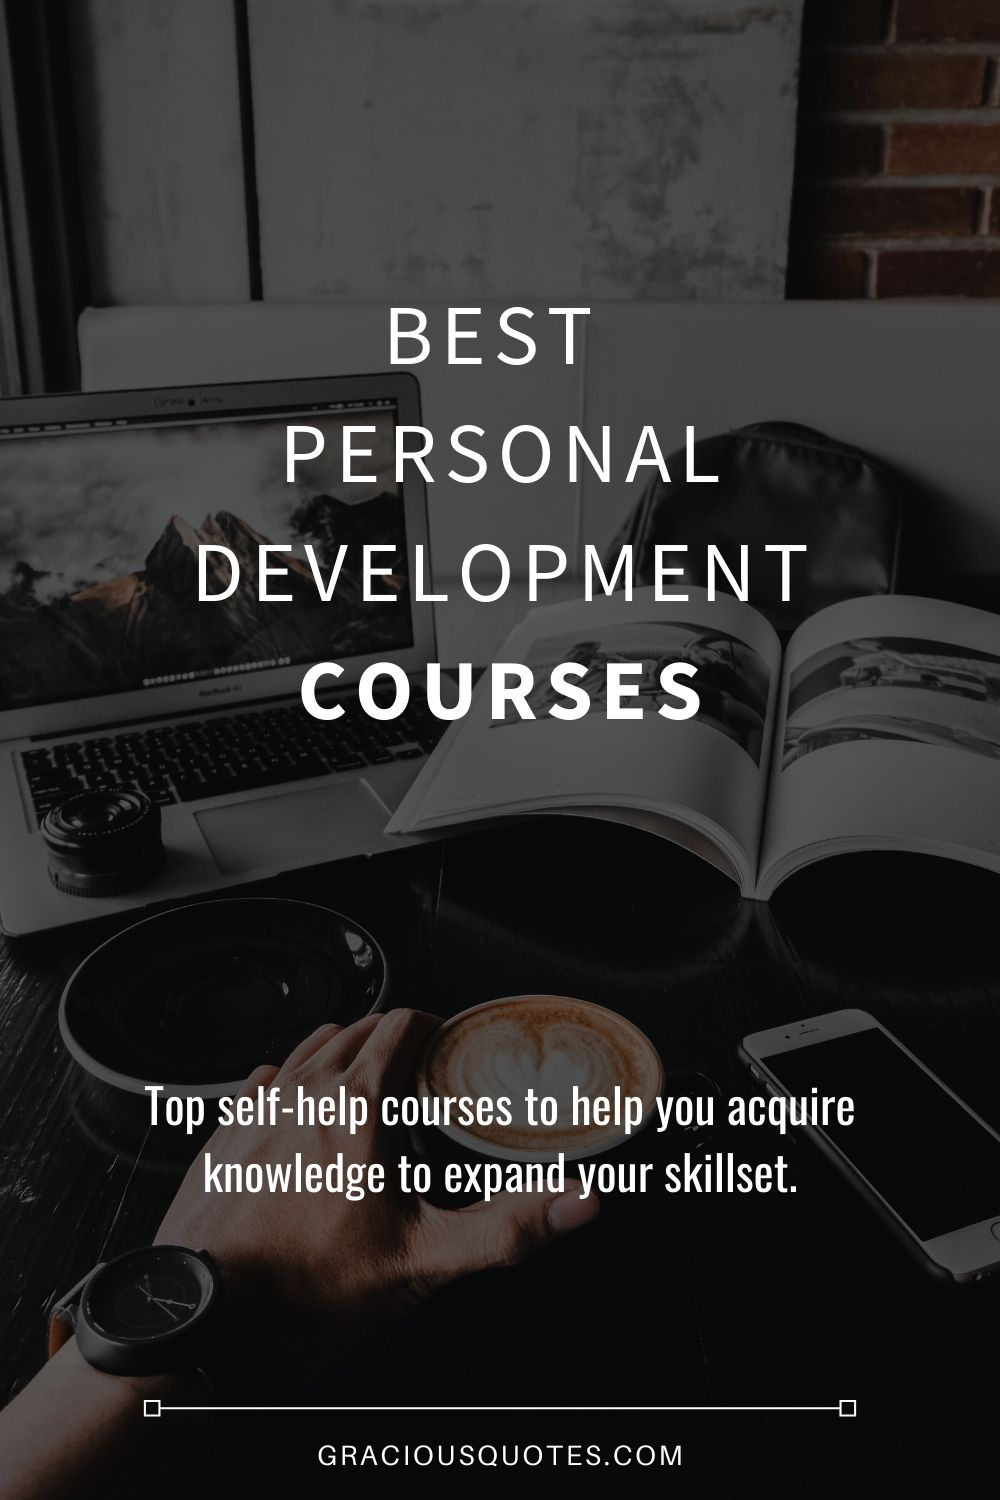 Best Personal Development Courses